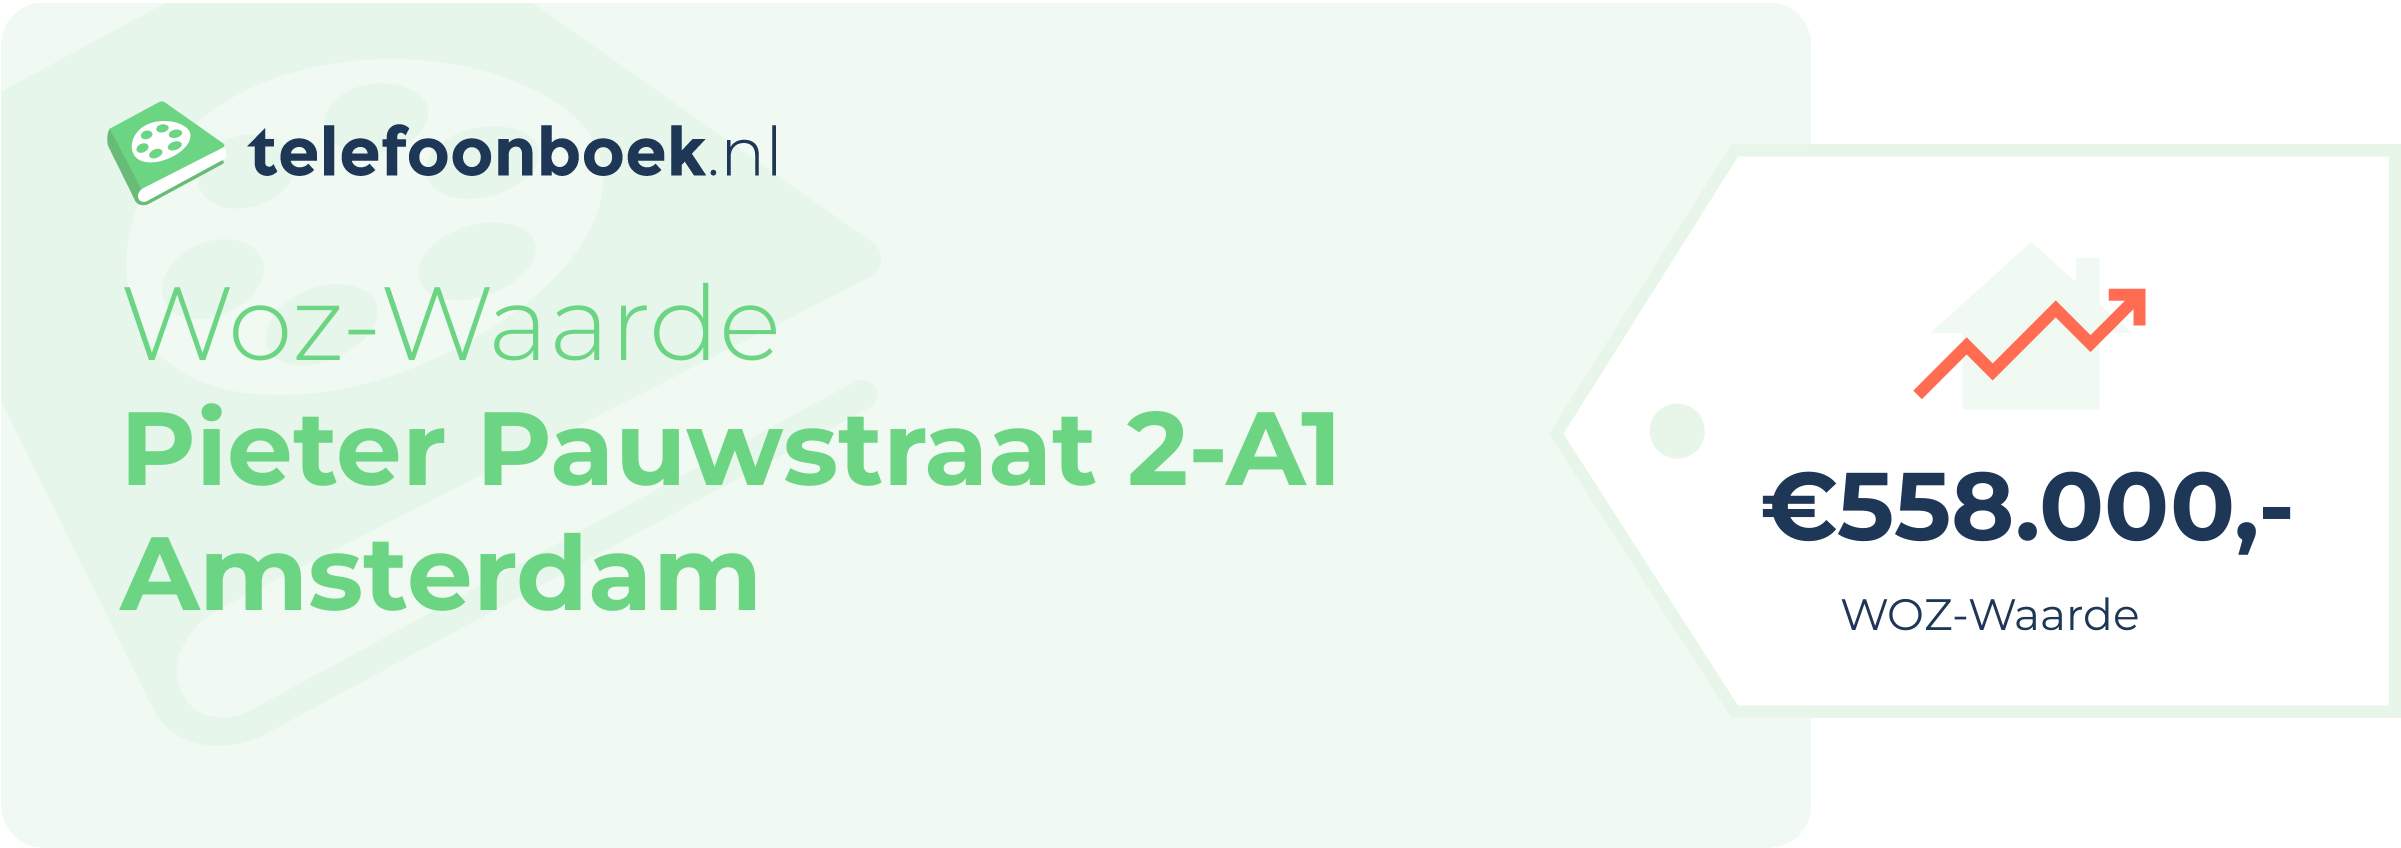 WOZ-waarde Pieter Pauwstraat 2-A1 Amsterdam